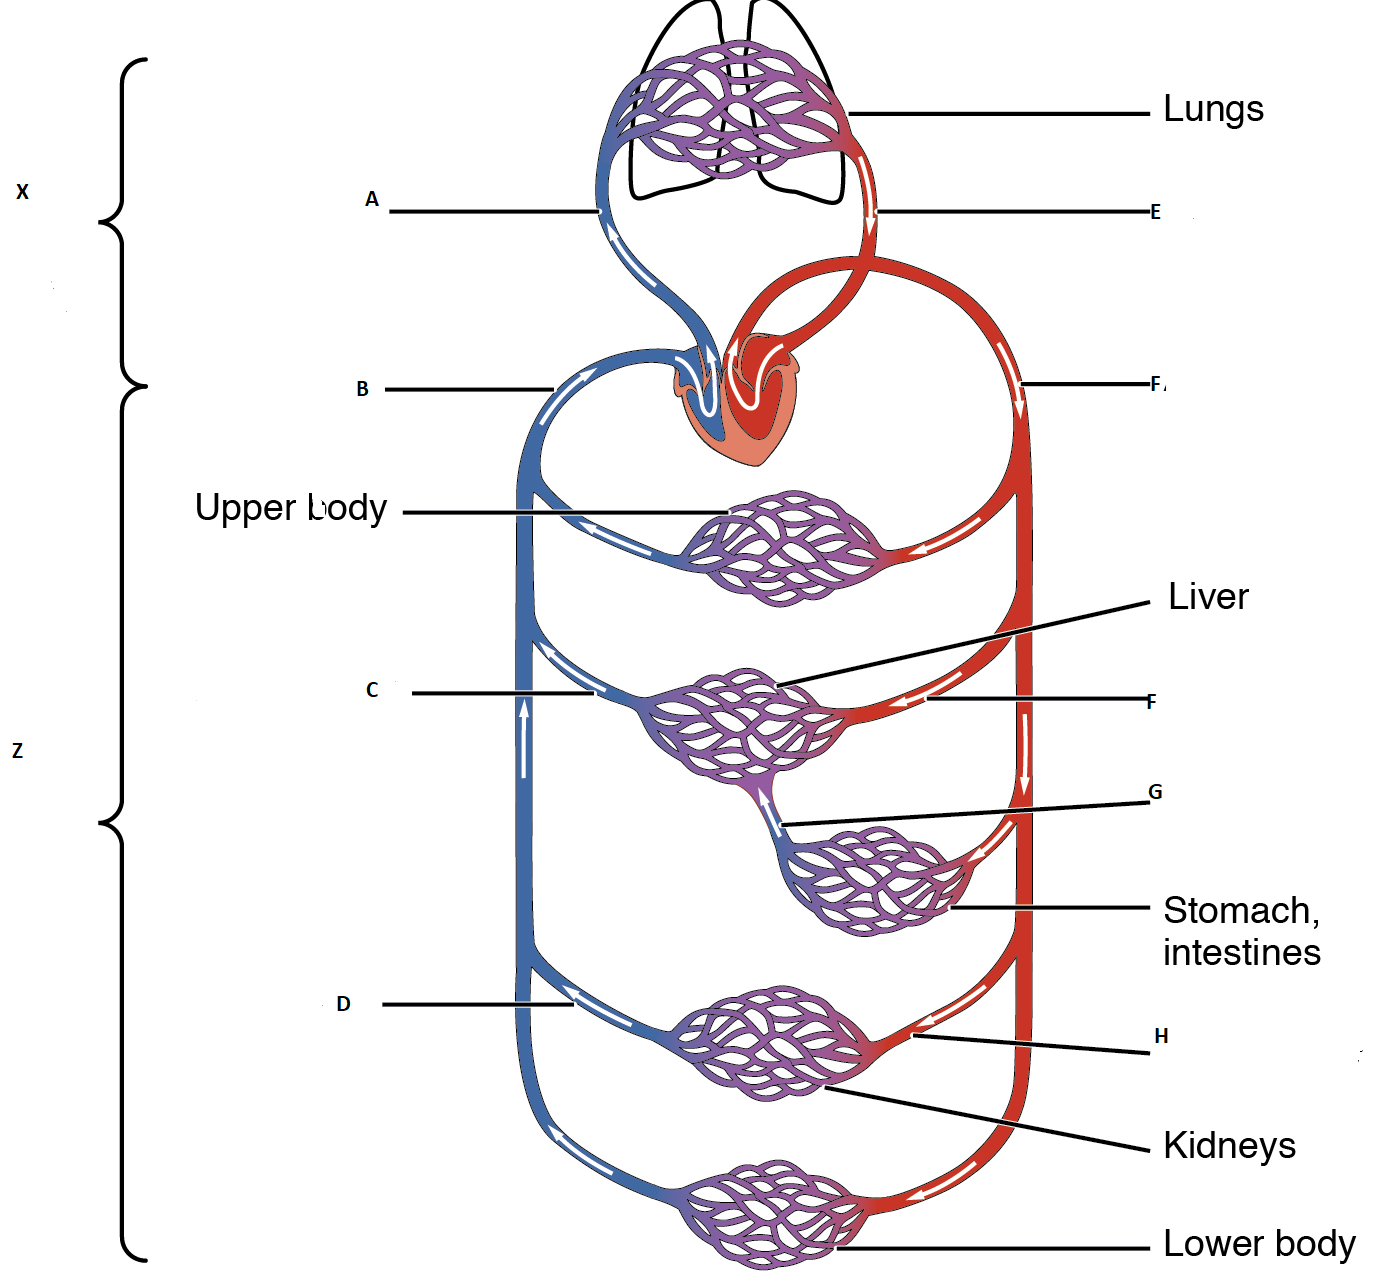 Major blood vessels | Circulatory System Quiz - Quizizz